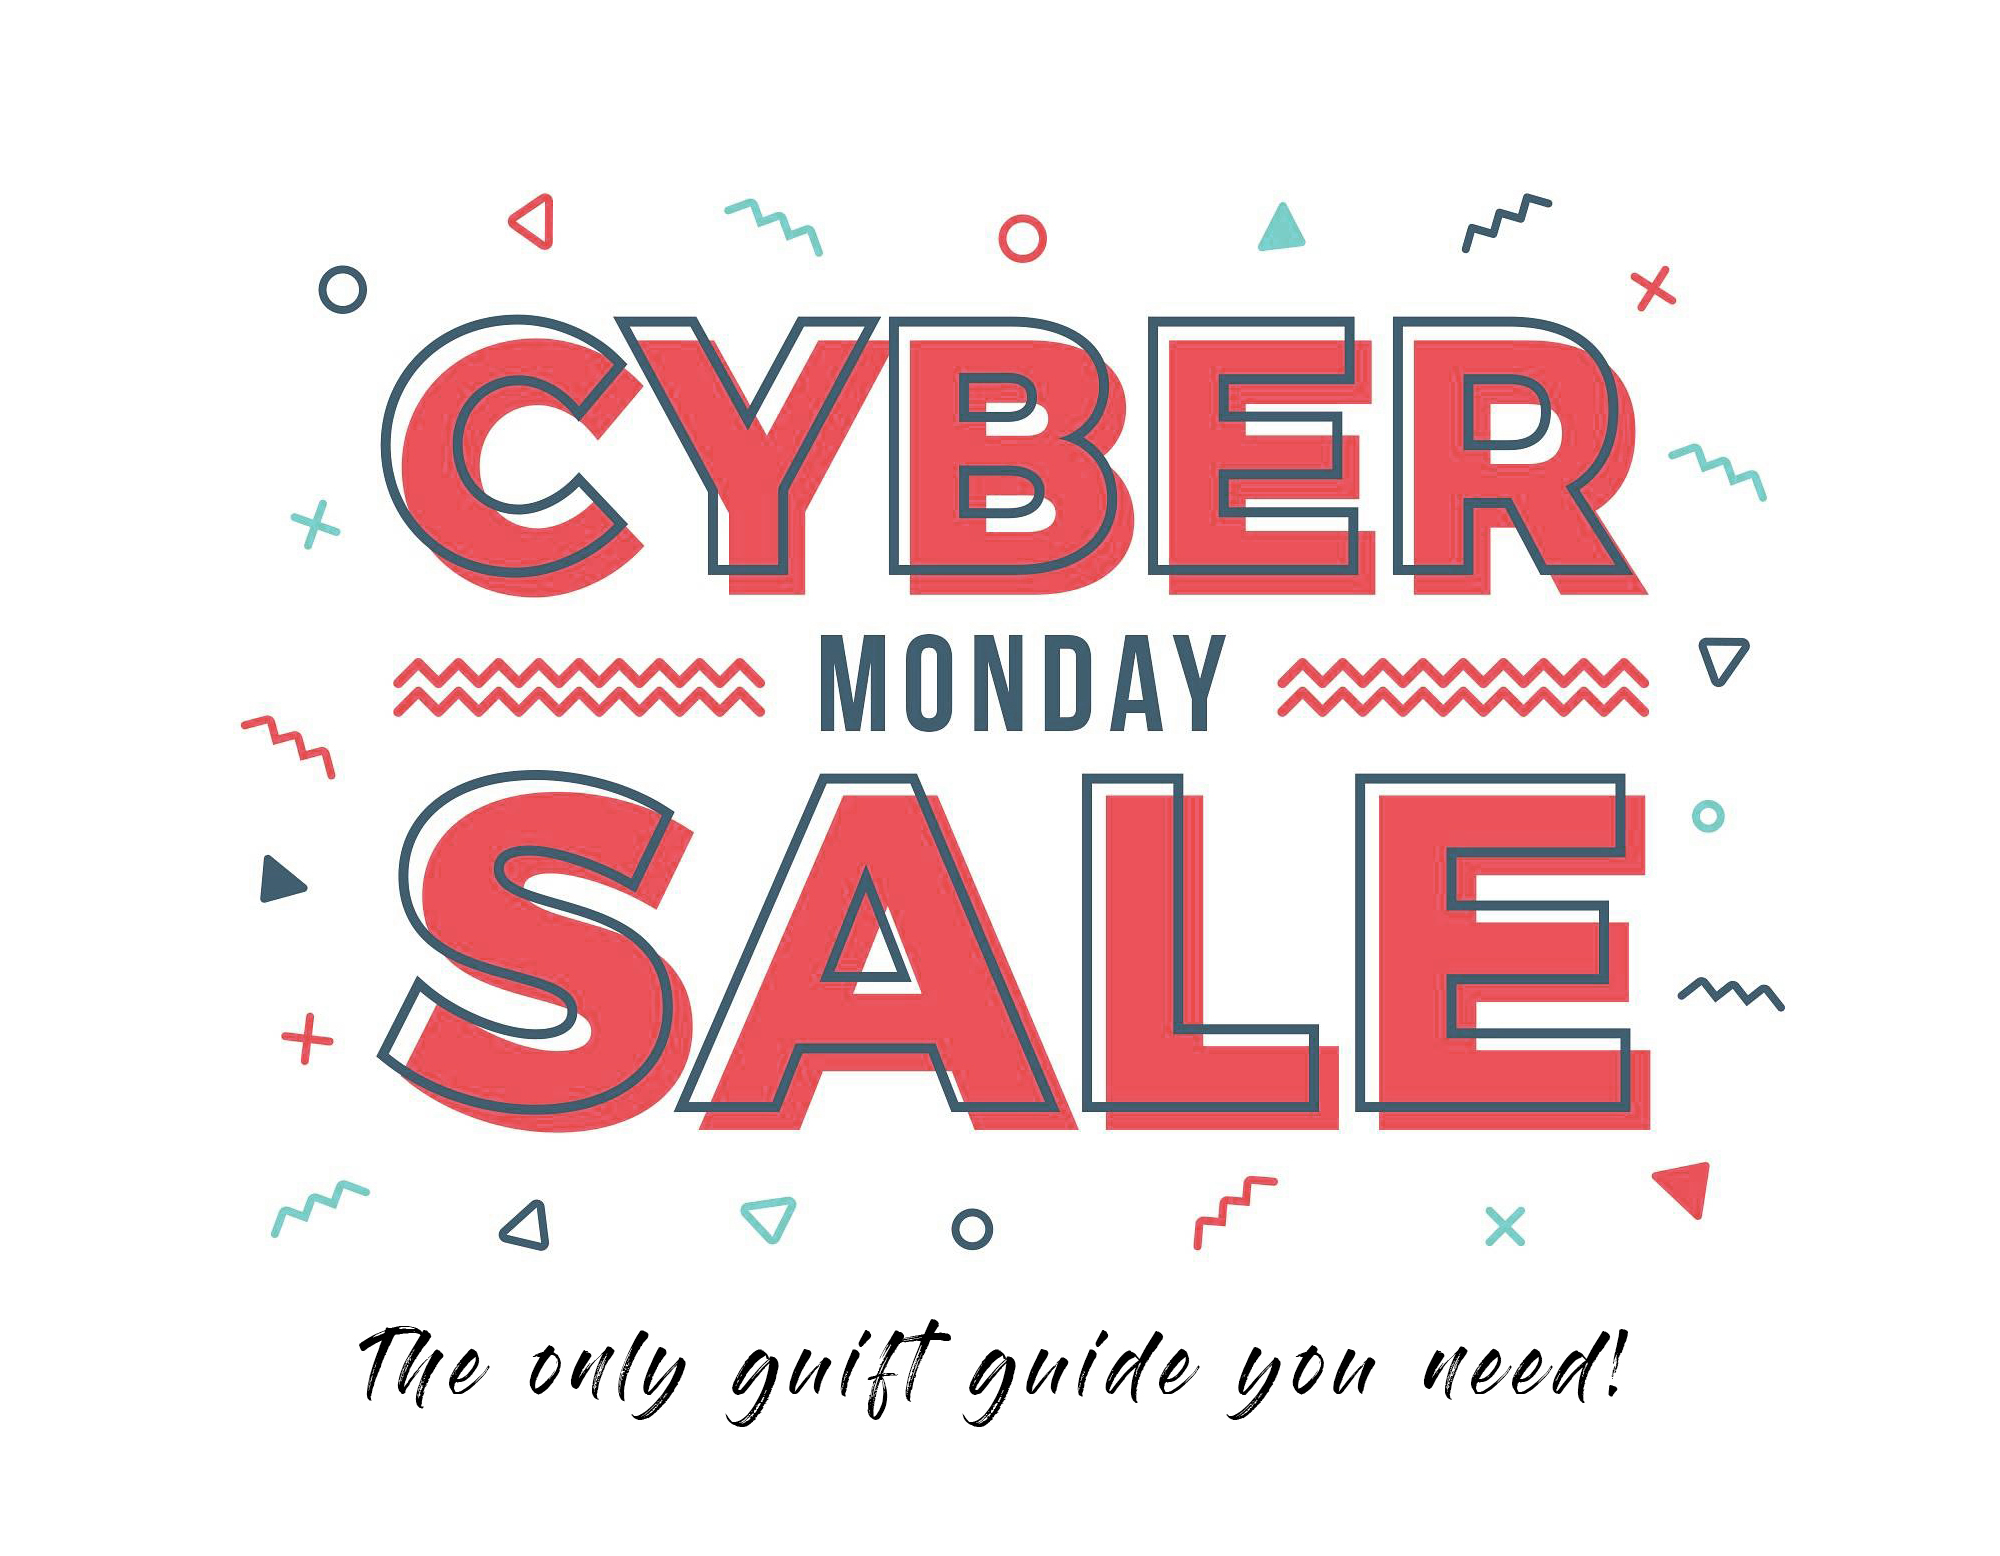 Cyber Monday Sale Guide